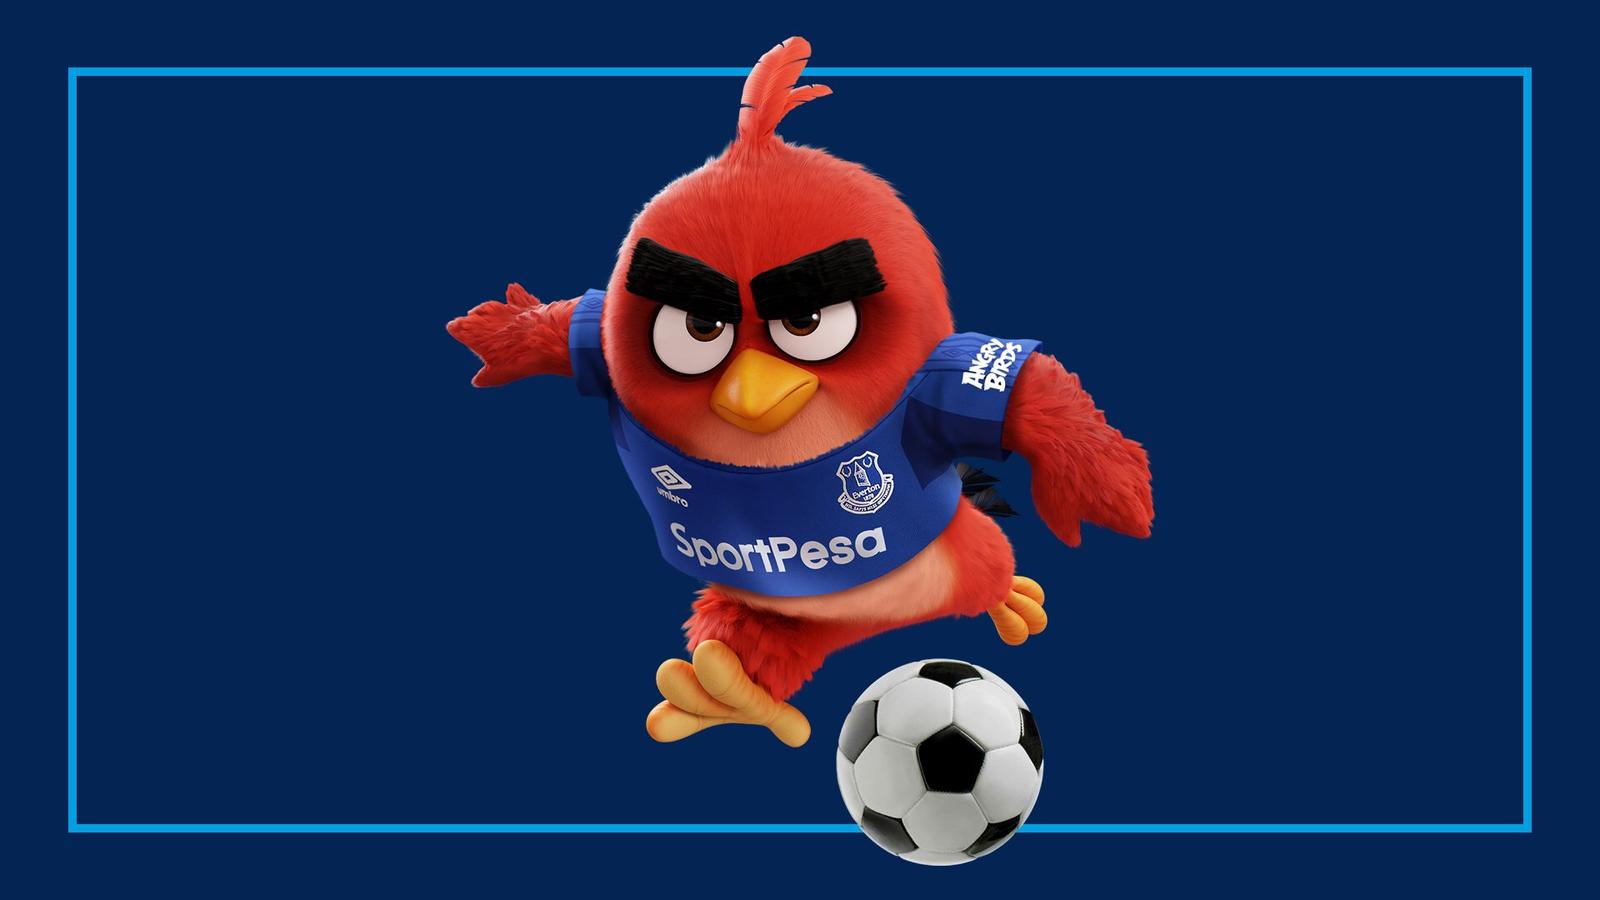 everton-sign-angry-birds-sleeve-sponsor.jpg